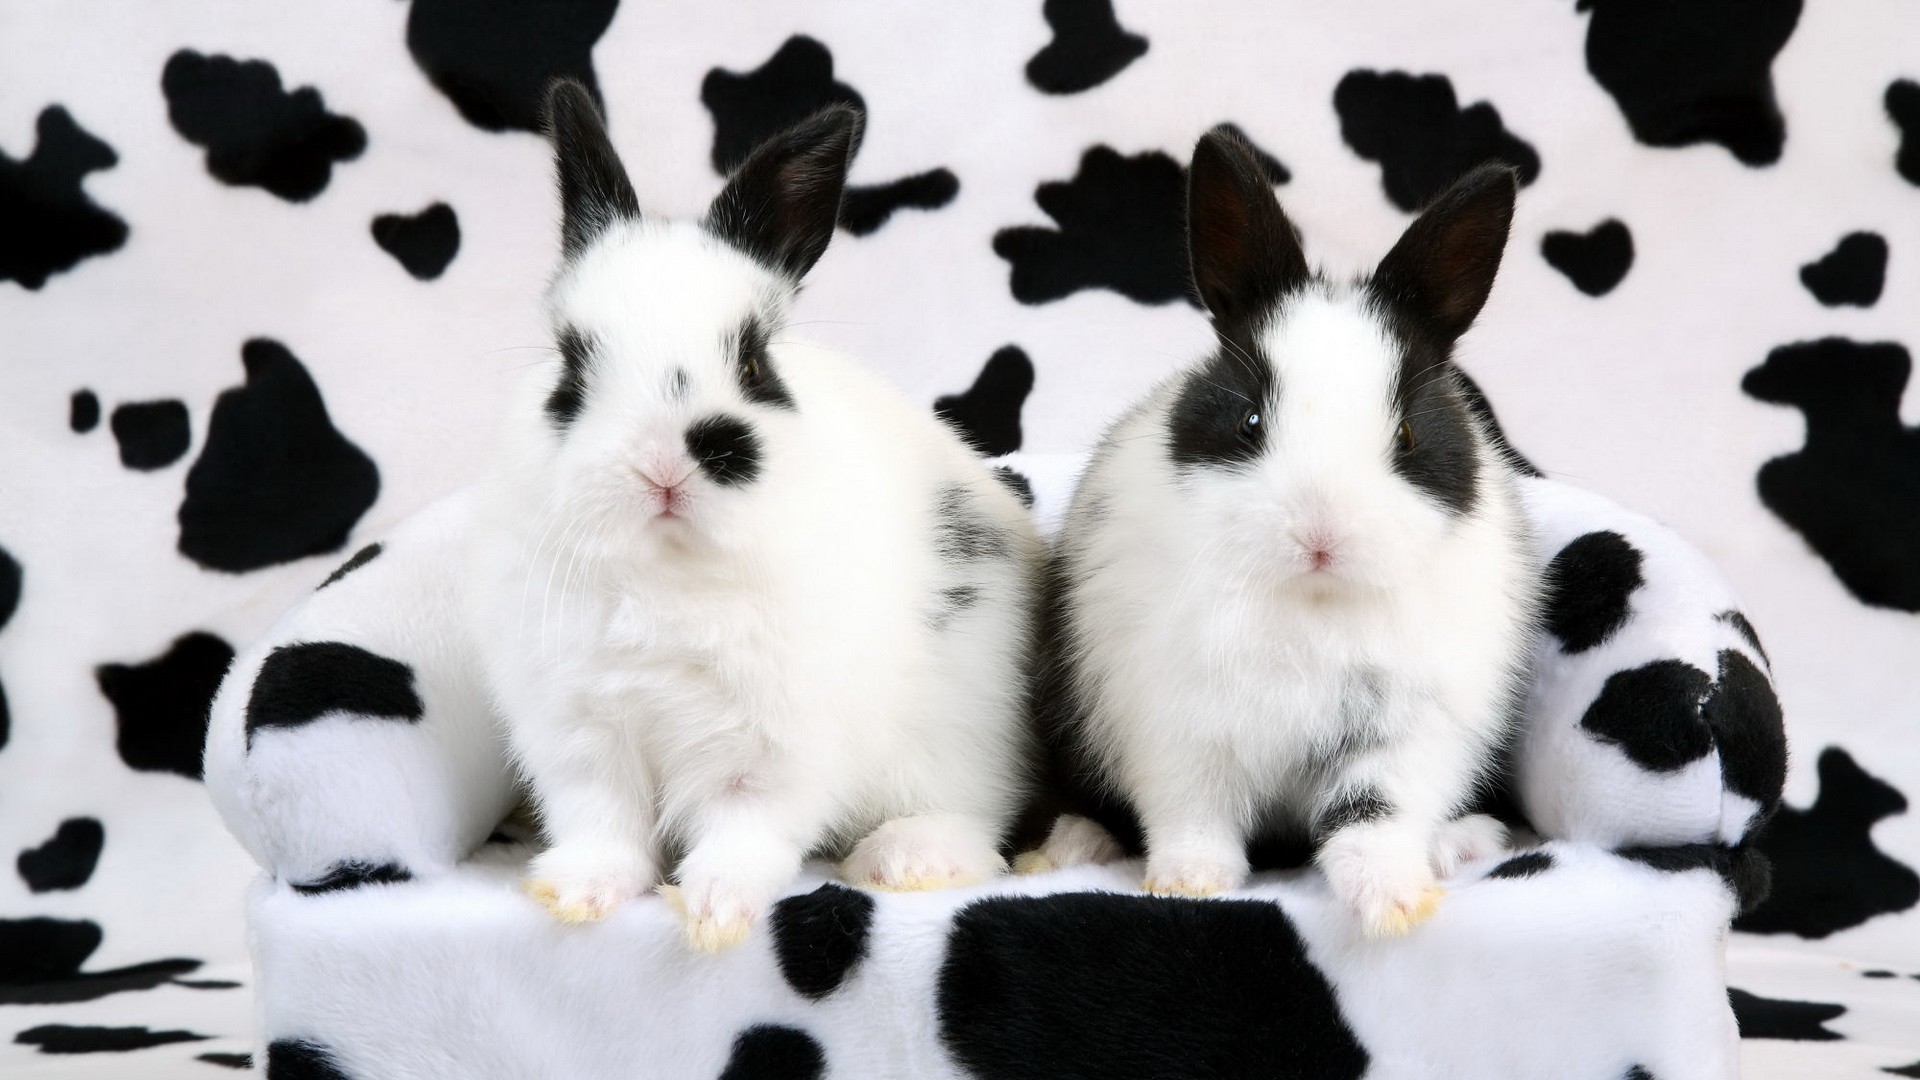 rabbits, spotted - desktop wallpaper